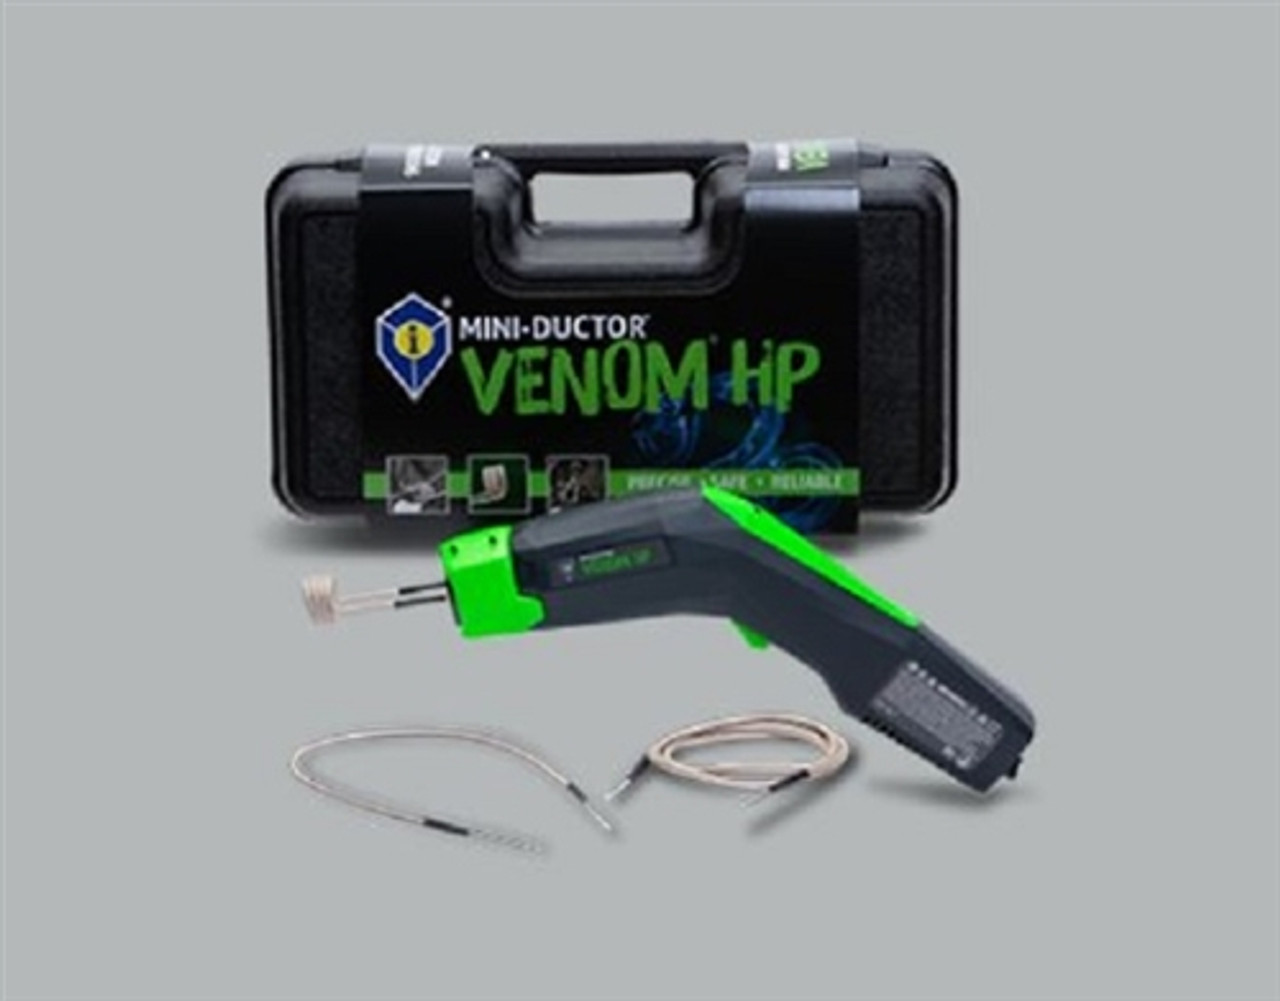 Induction Innovations Mini-Ductor Venom HP - MDV-787